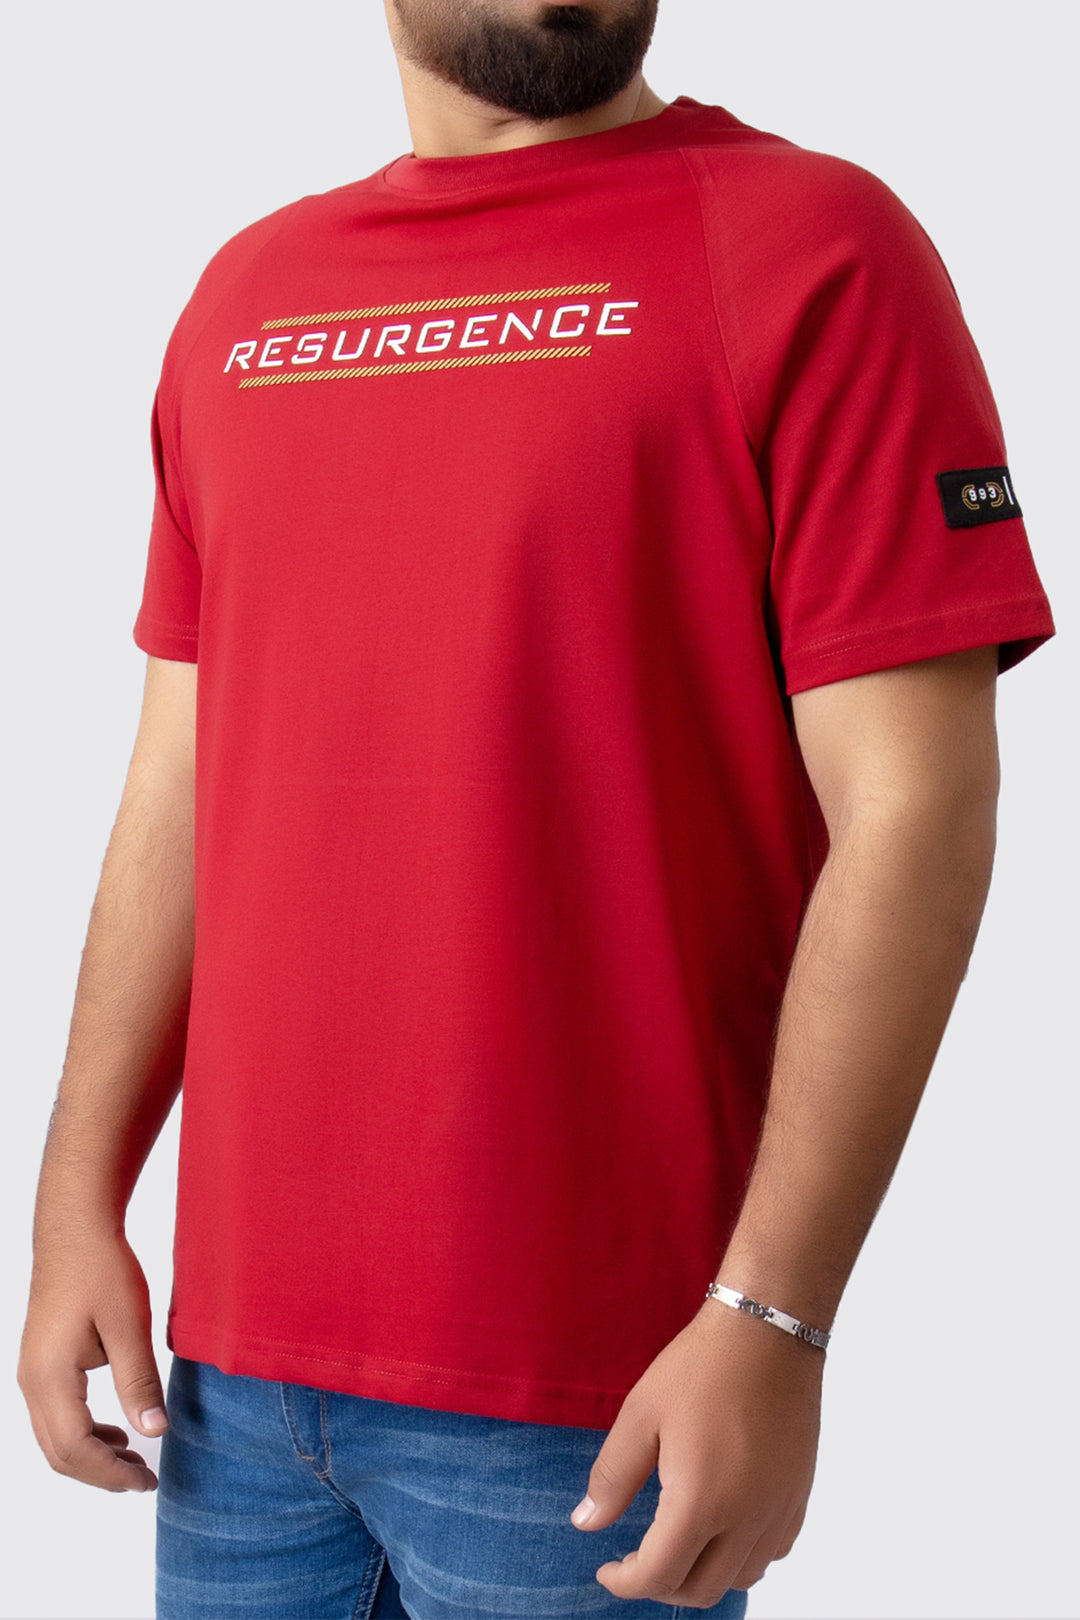 Resurgence Maroon Graphic T-Shirt - A23 - MT0285R